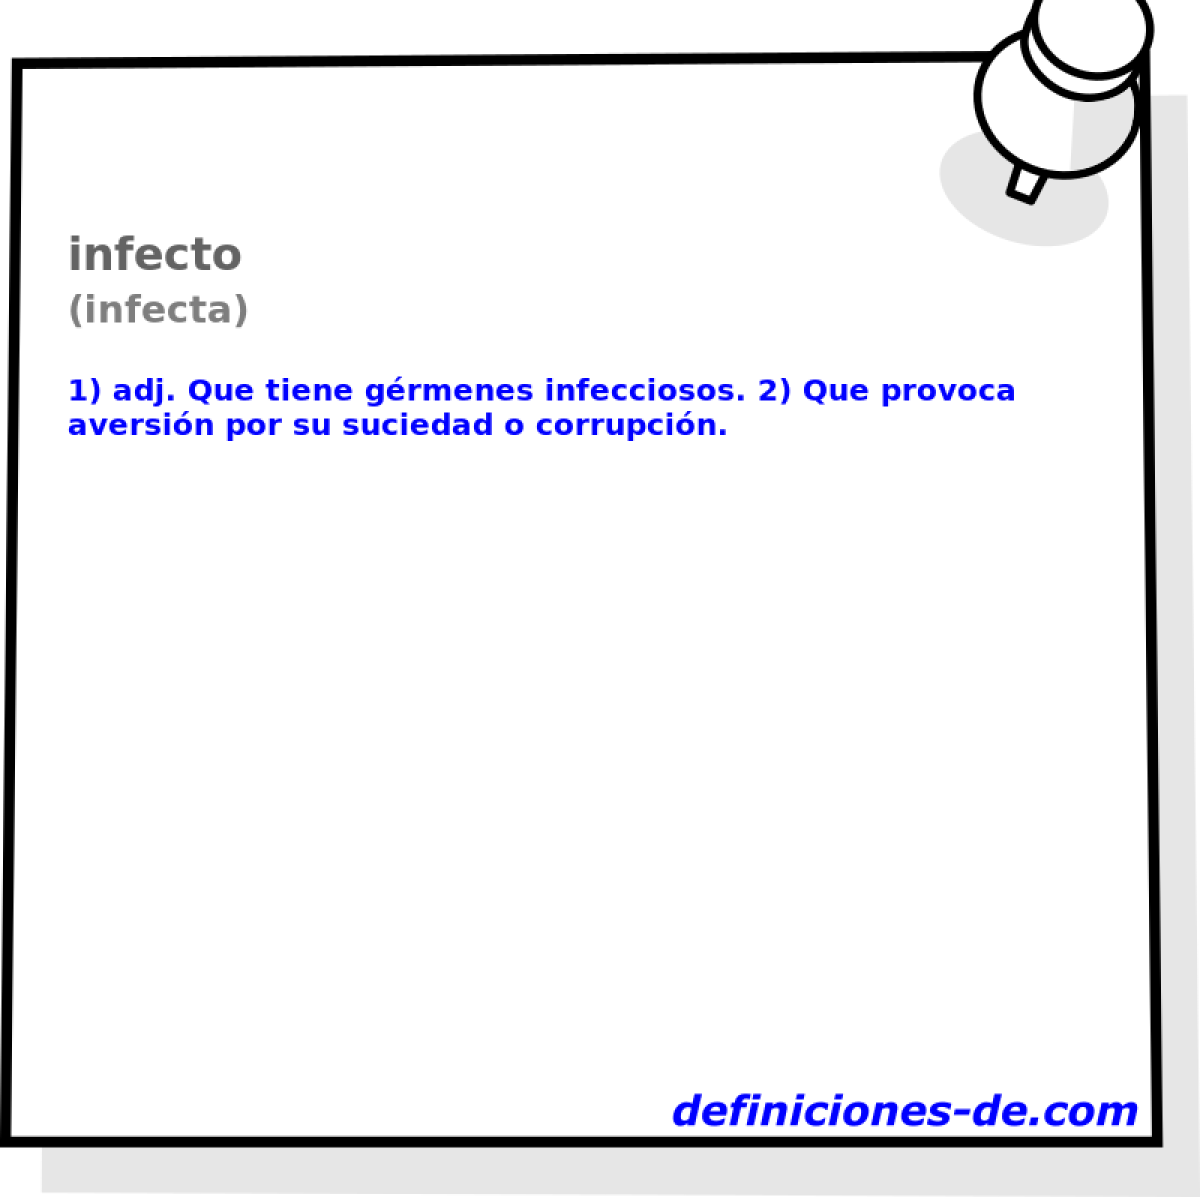 infecto (infecta)